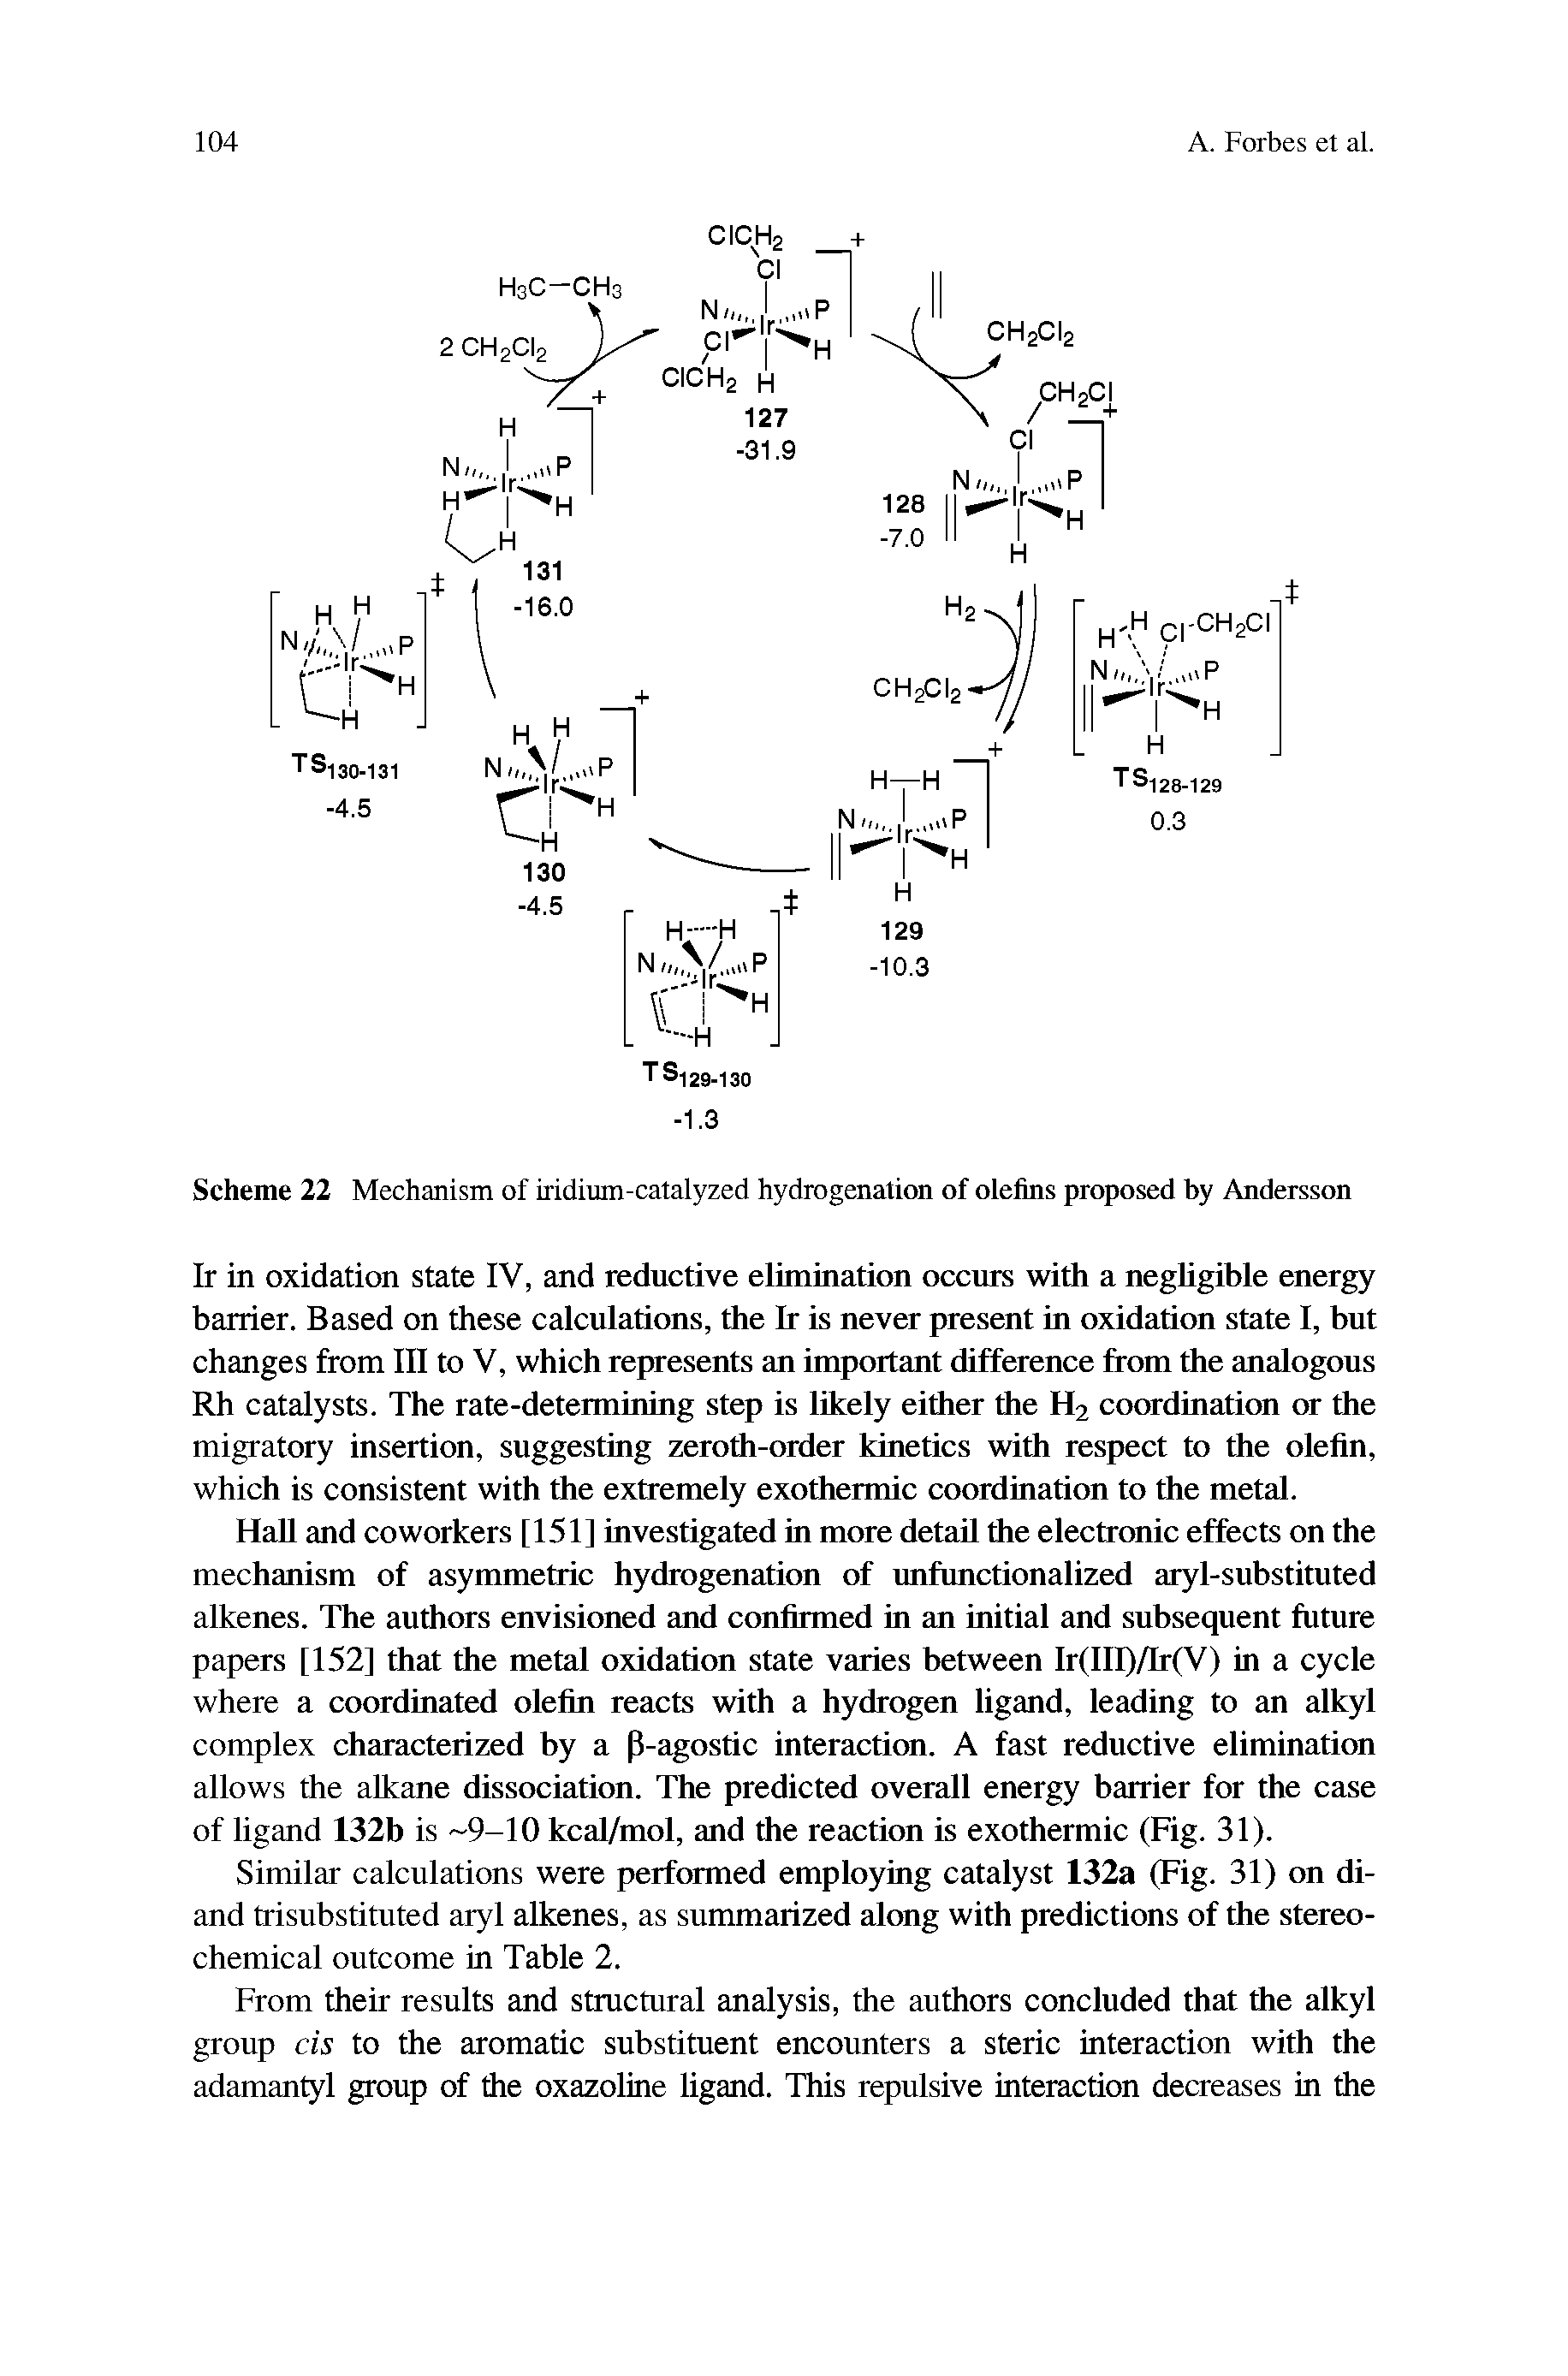 Scheme 22 Mechanism of iridium-catalyzed hydrogenation of olefins proposed by Andersson...